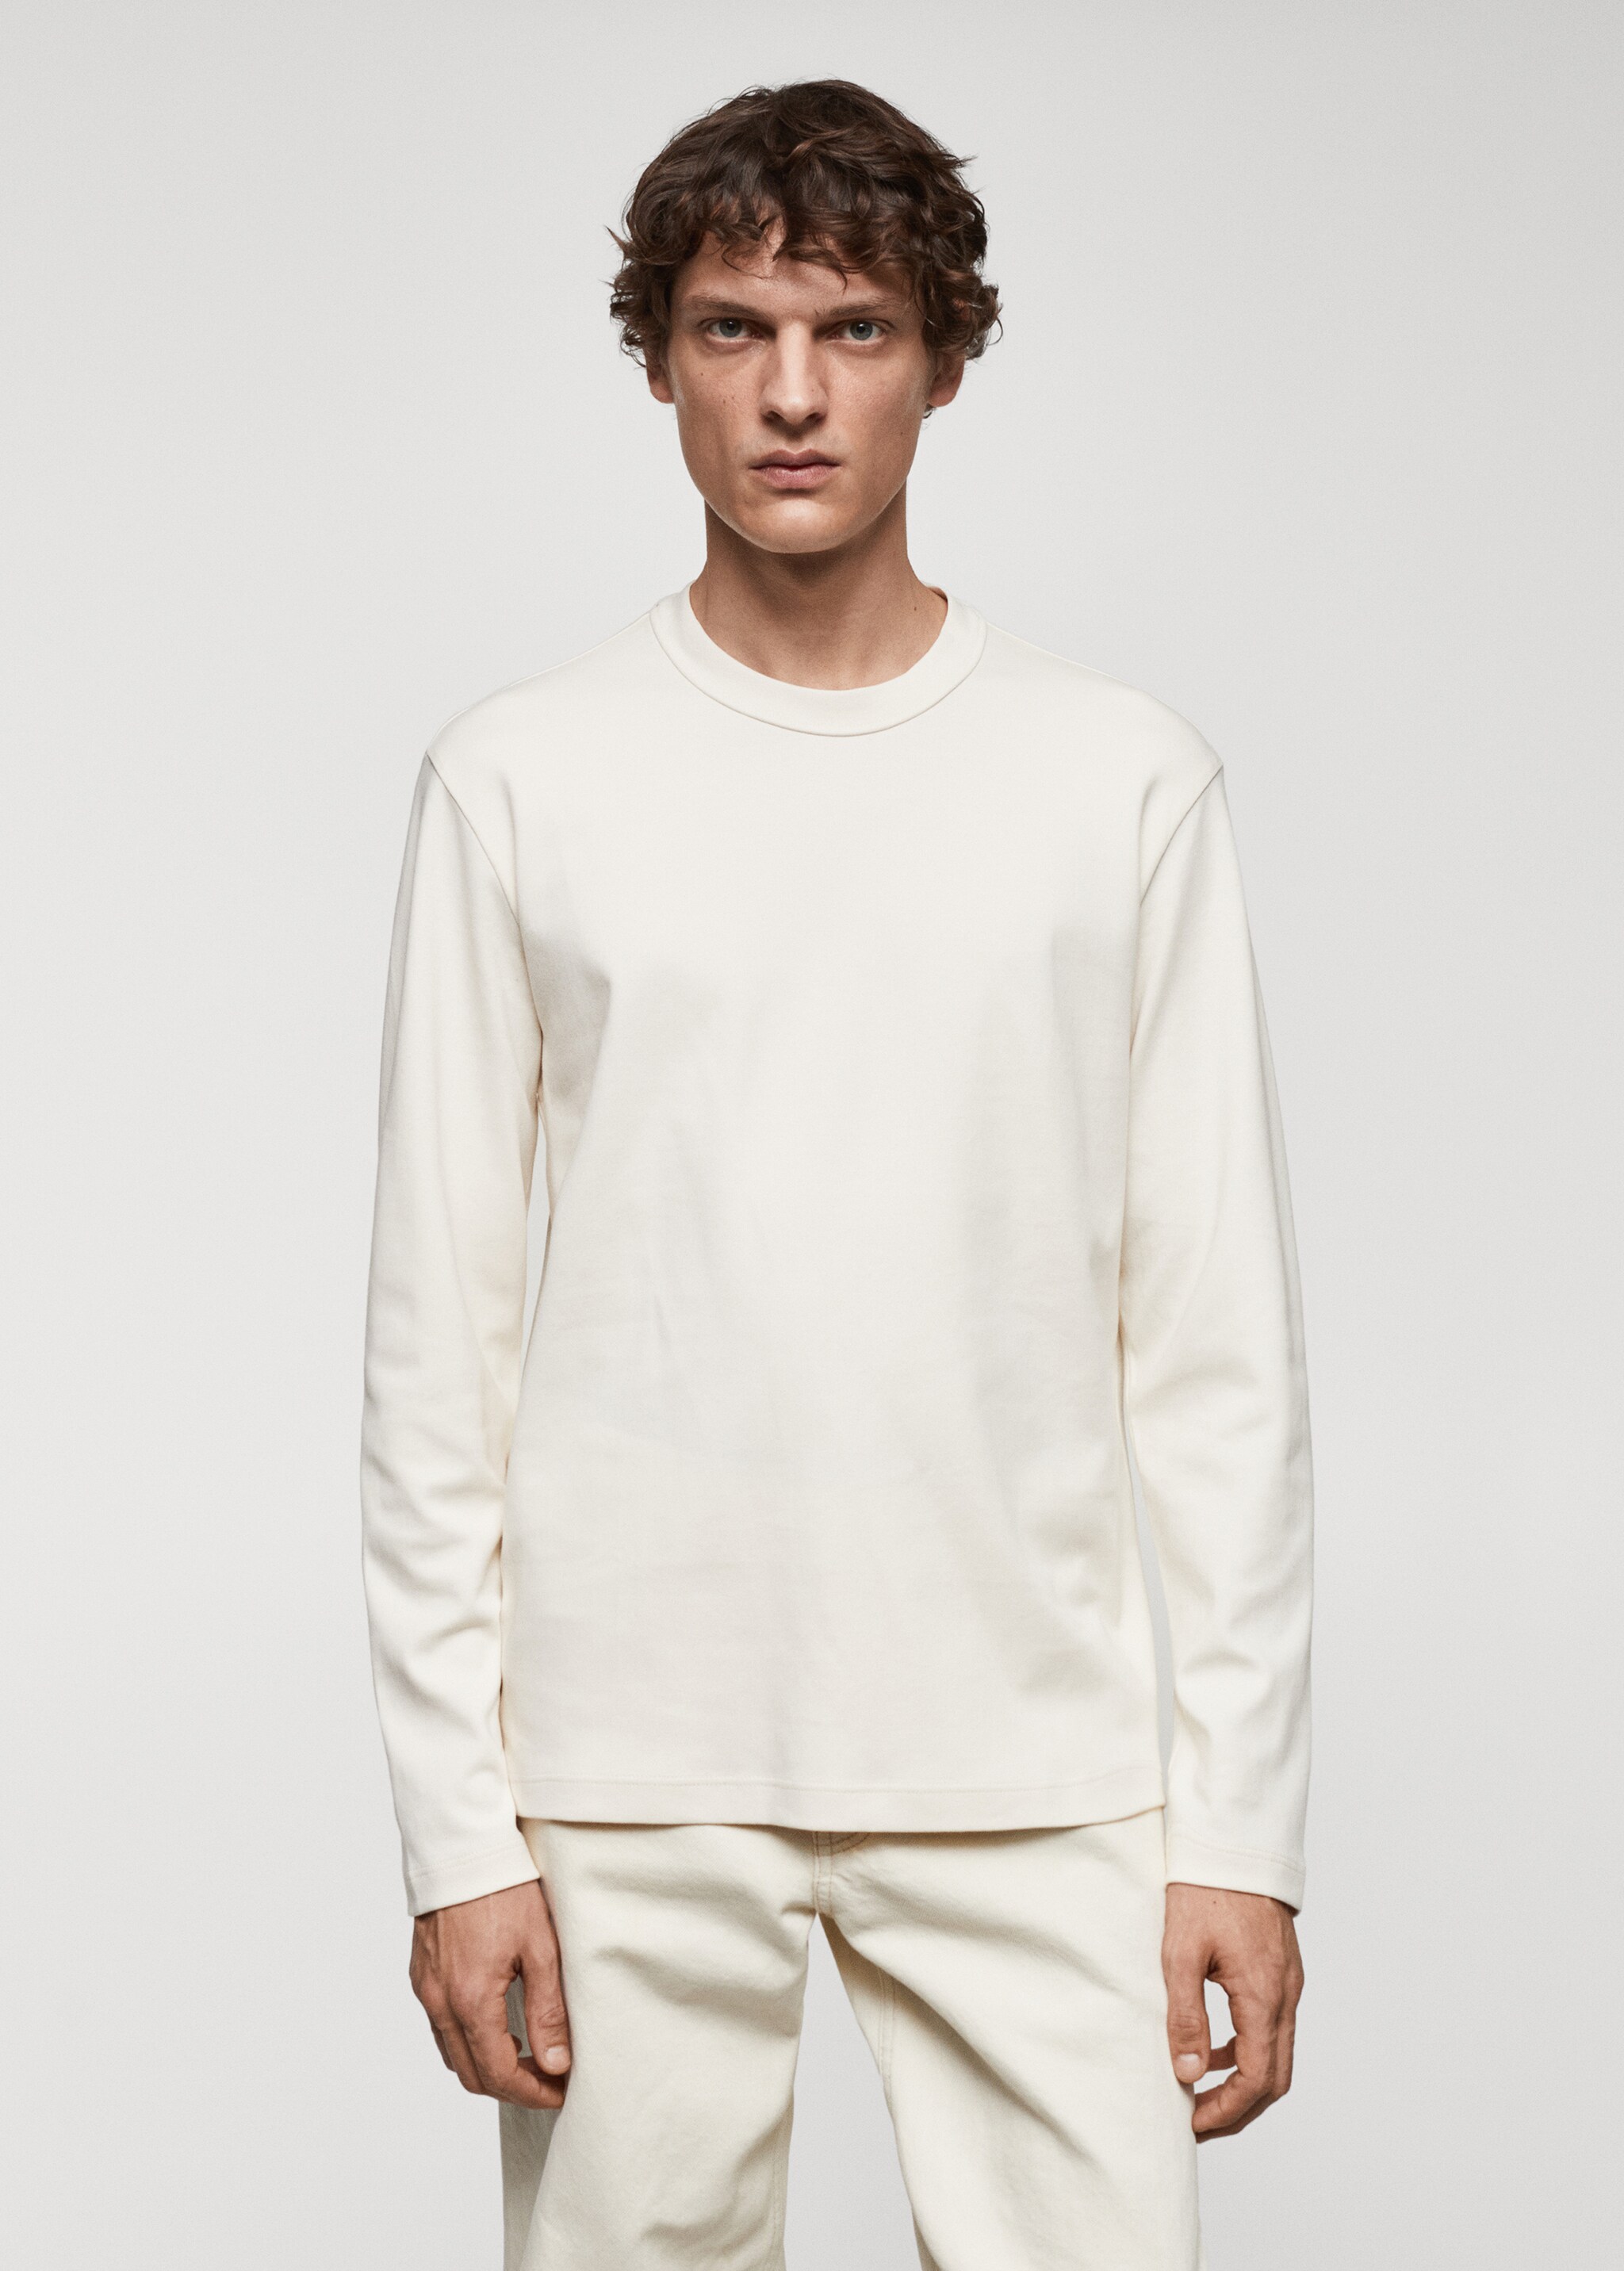 100% cotton long-sleeved t-shirt - Medium plane